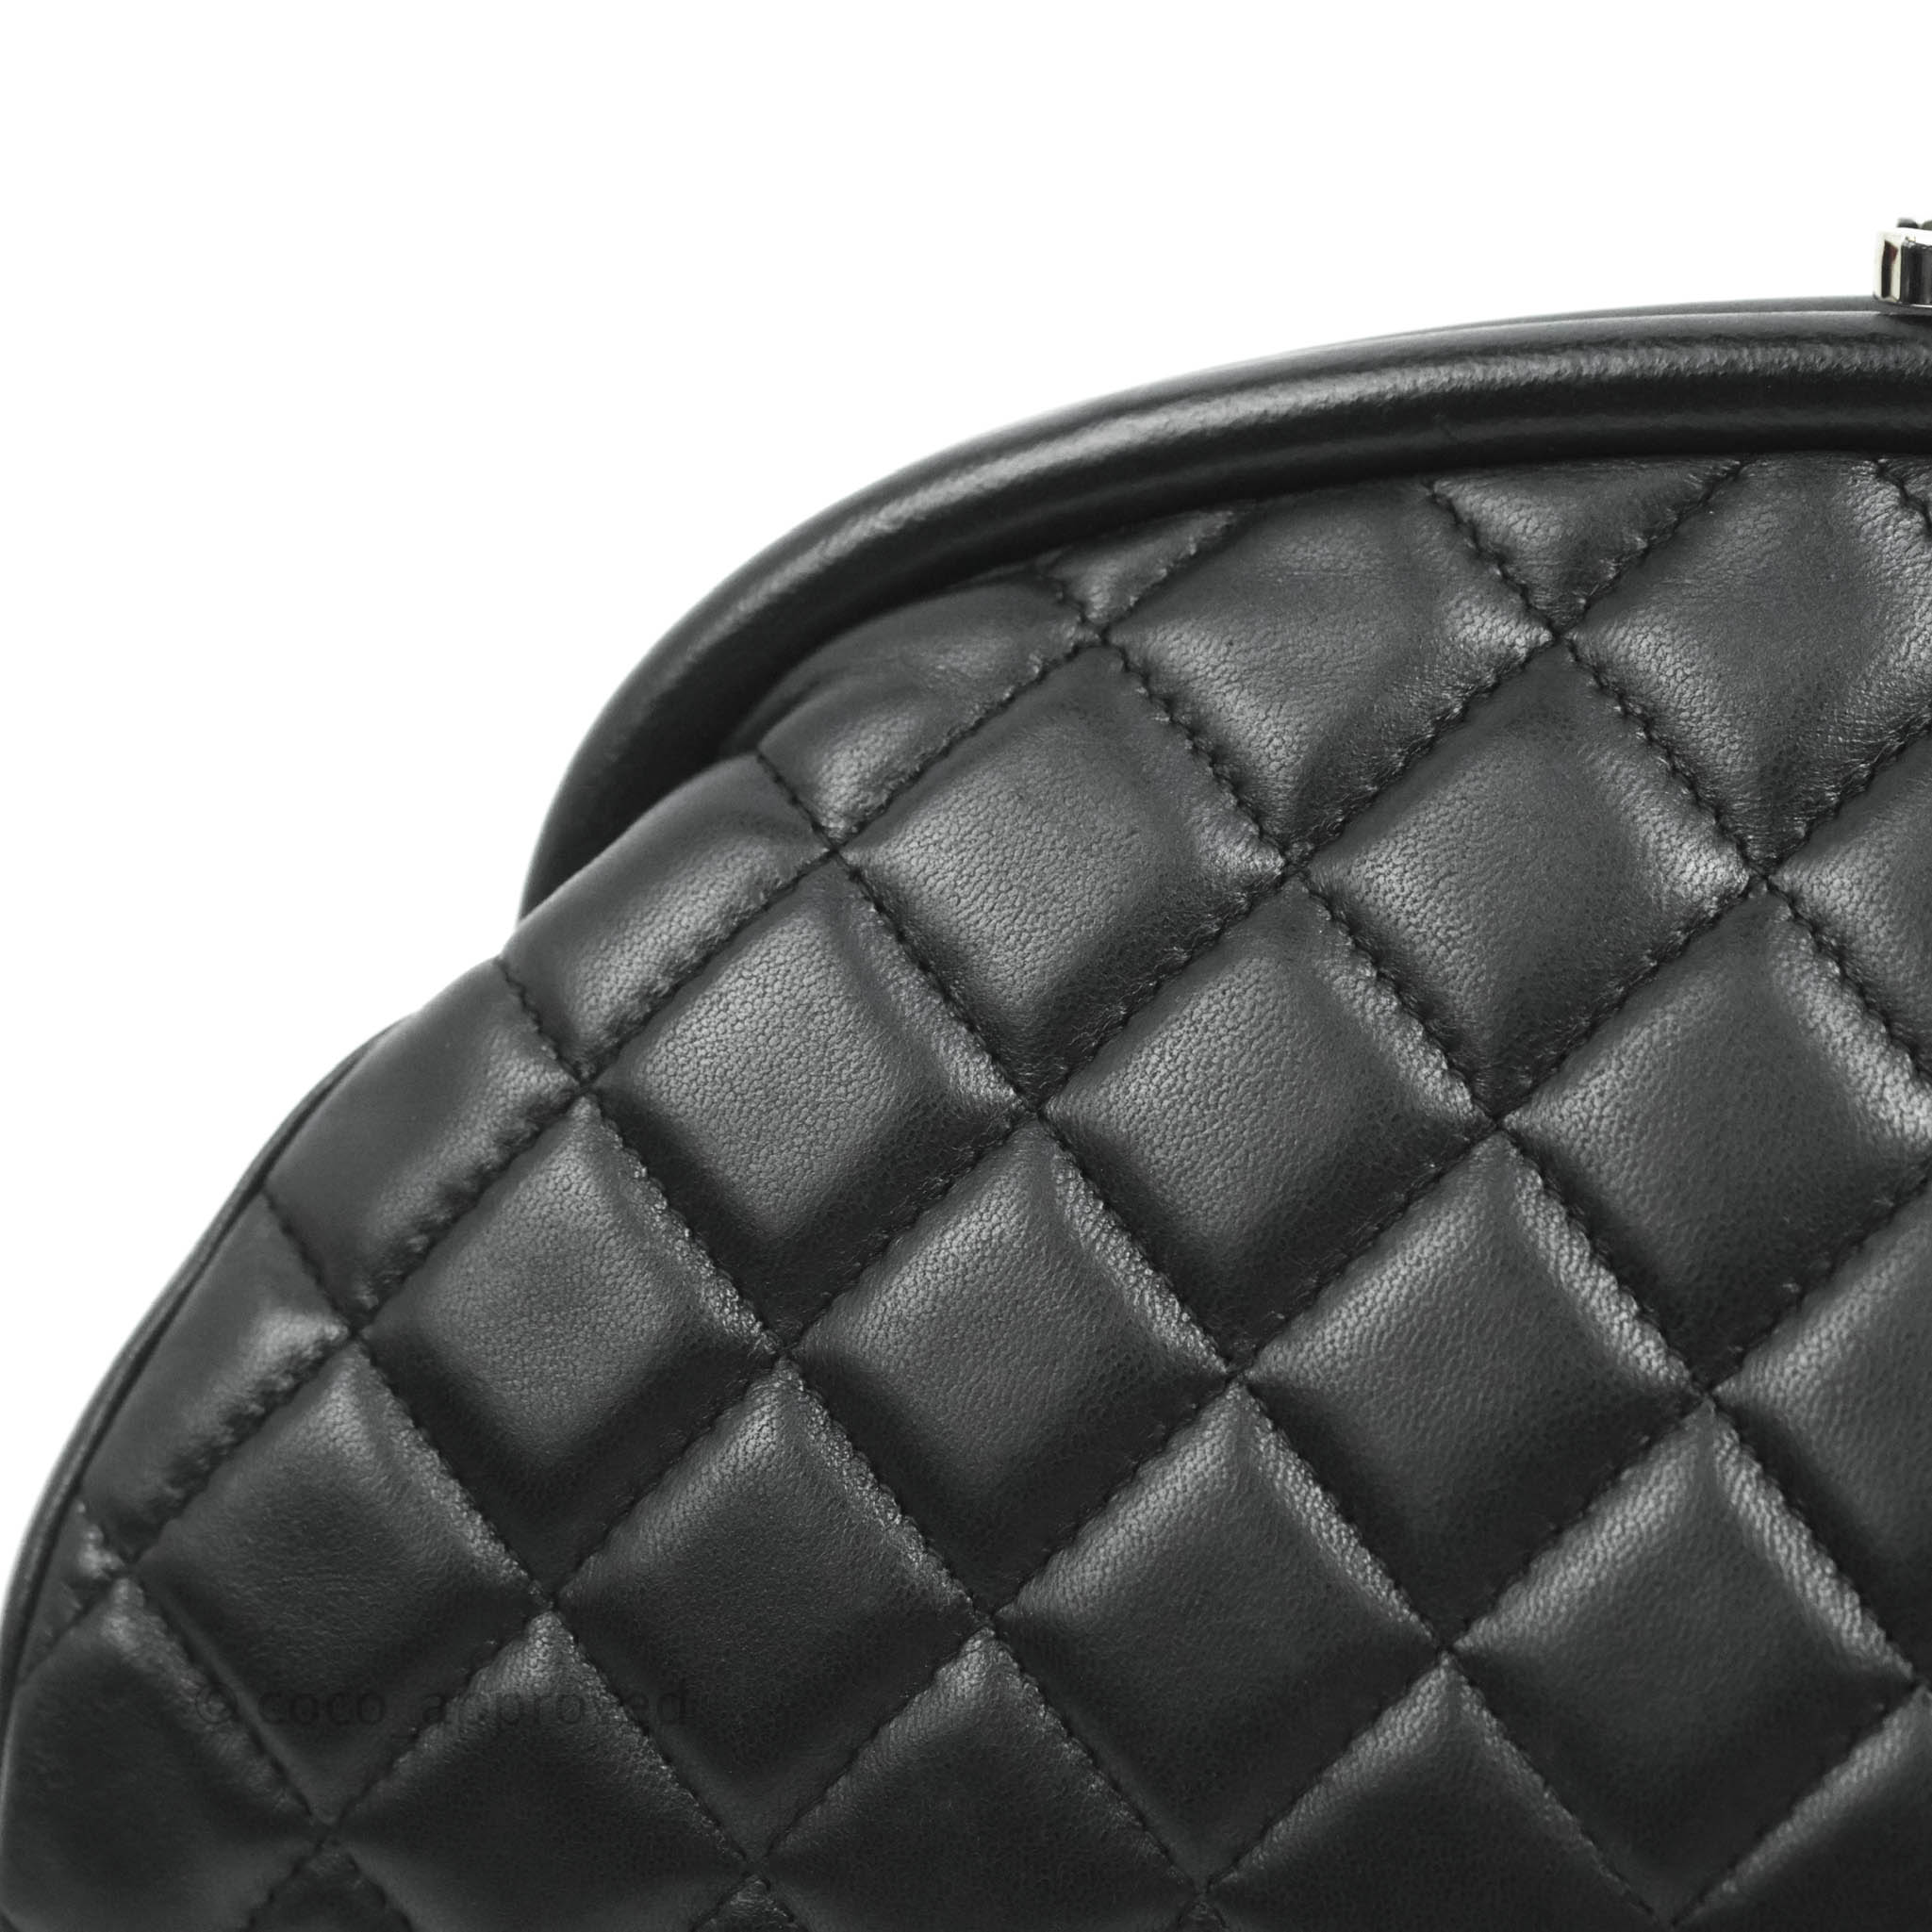 Chanel Black Small Kiss-Lock Lambskin Bag Gold-Tone Metal Leather